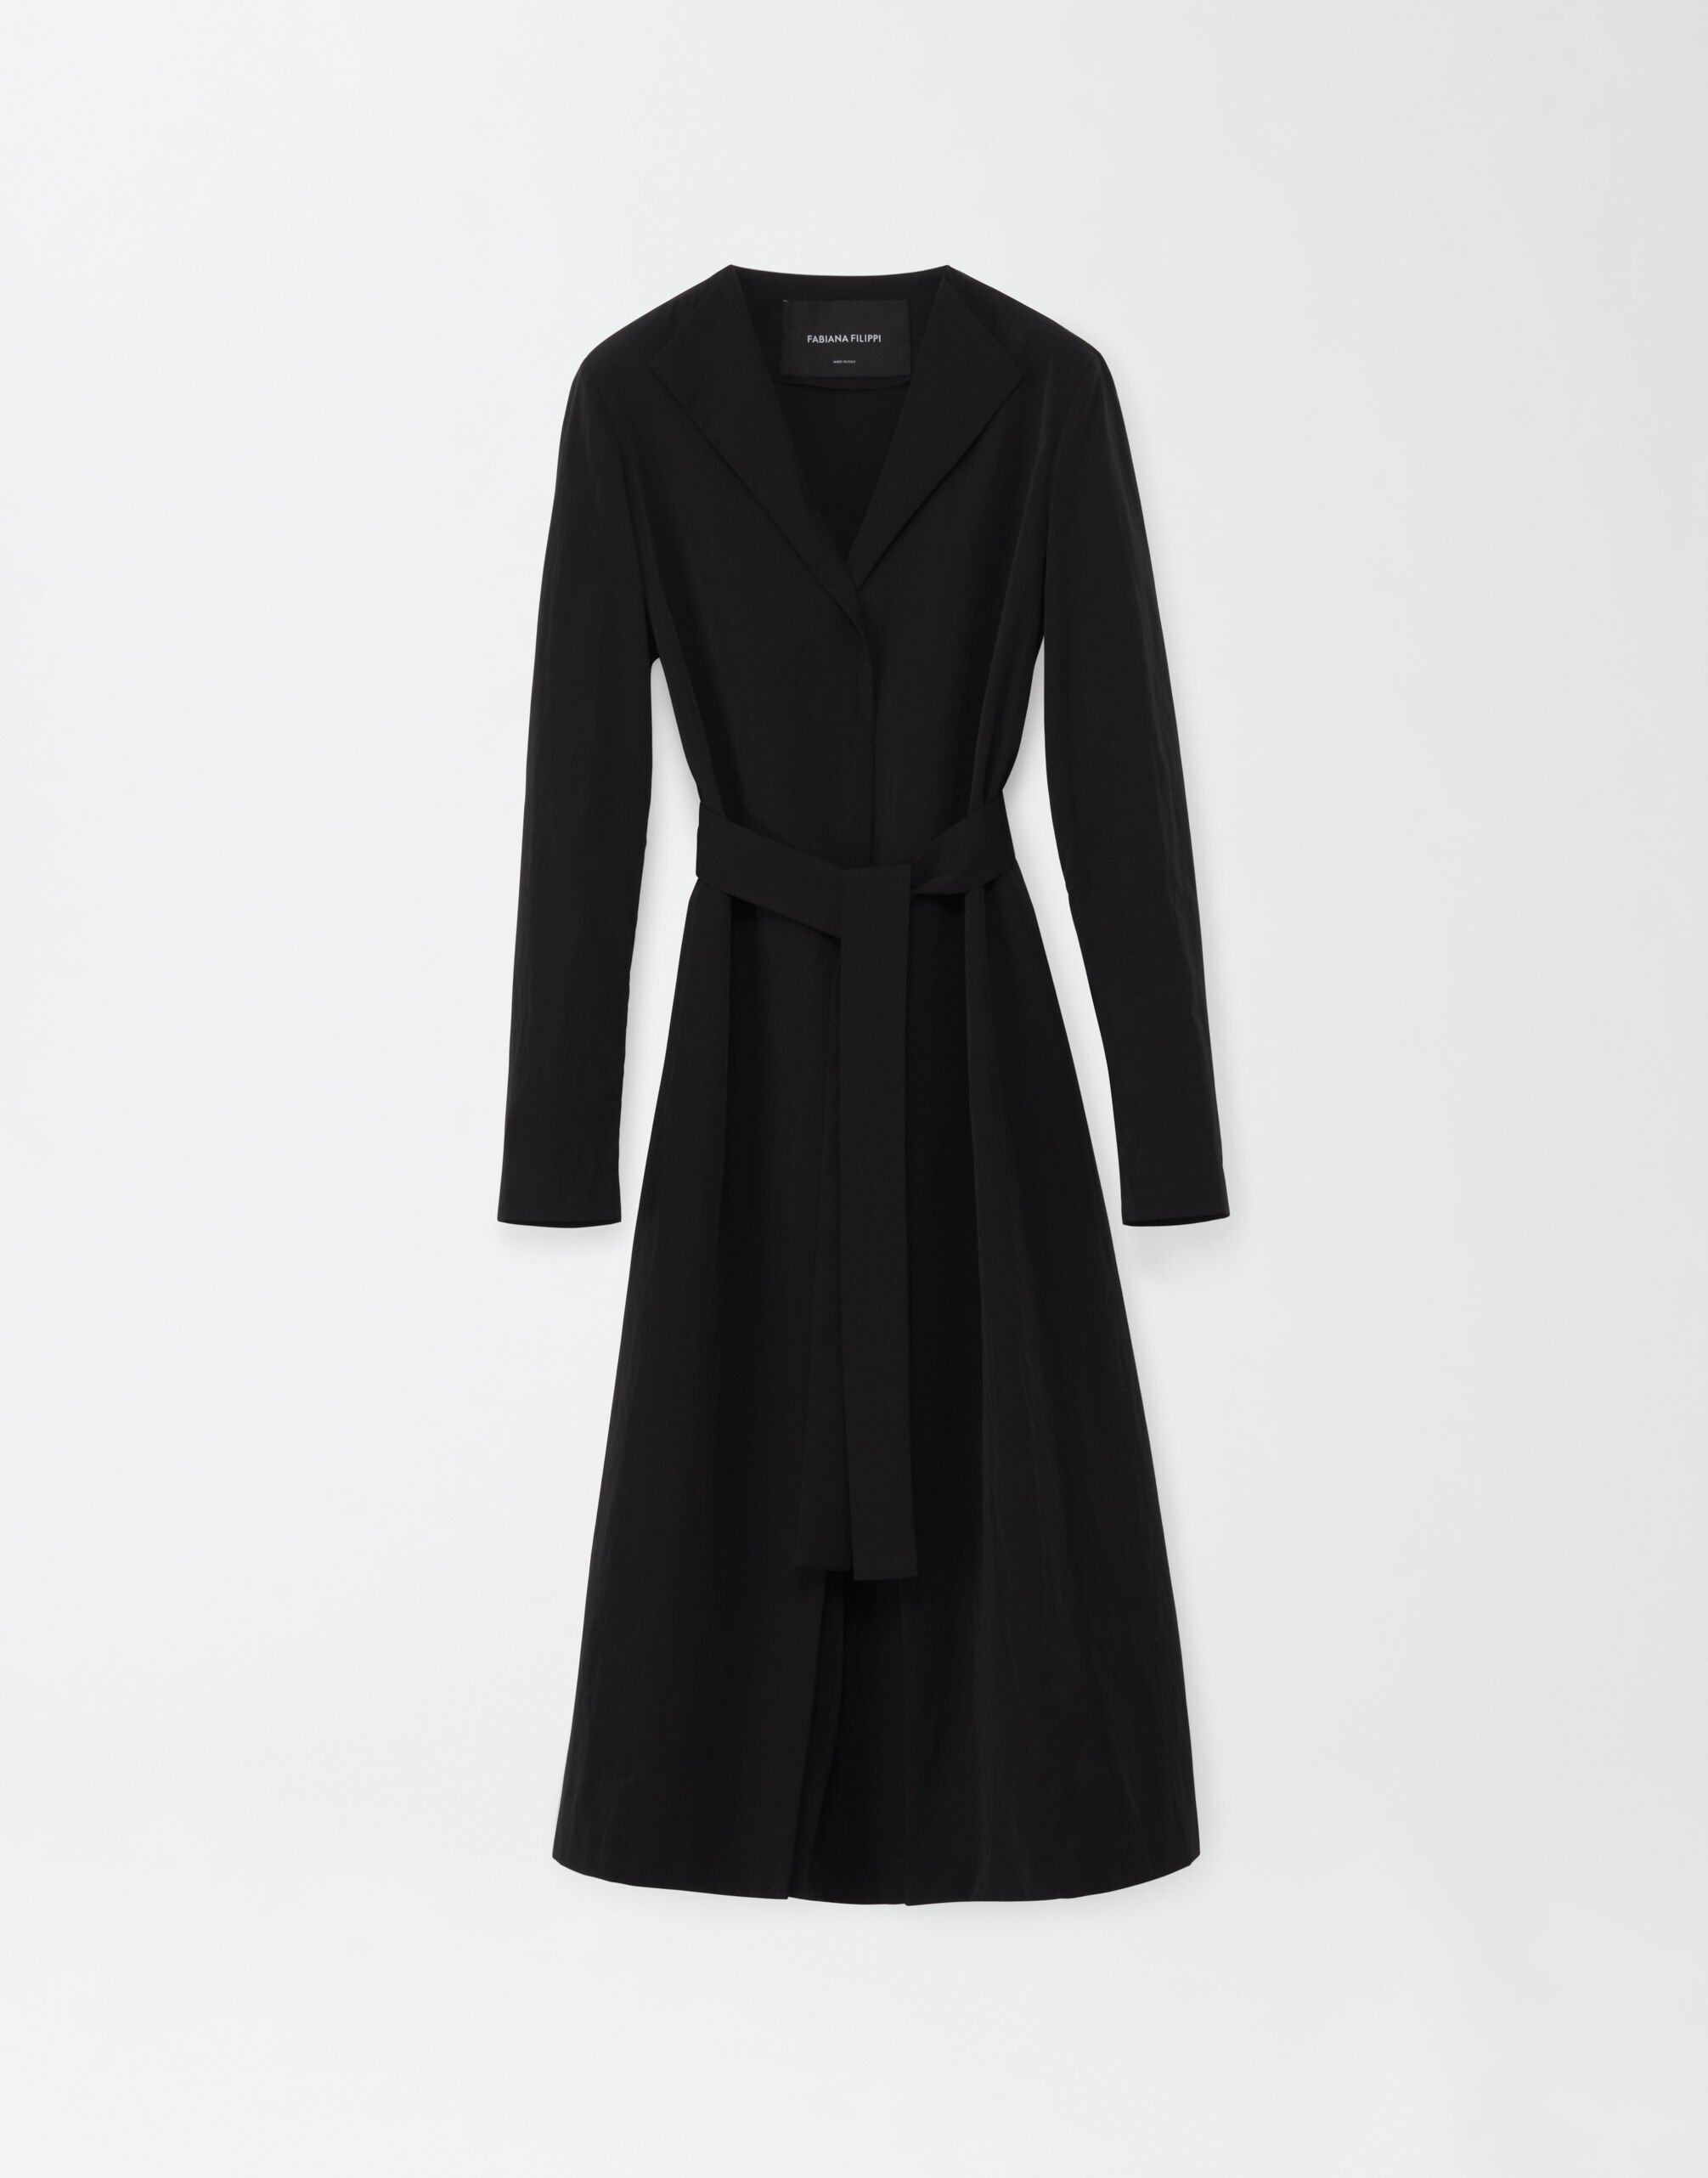 Fabiana Filippi Trench-coat en tissu technique ondulé, noir PLD274F583I9080000